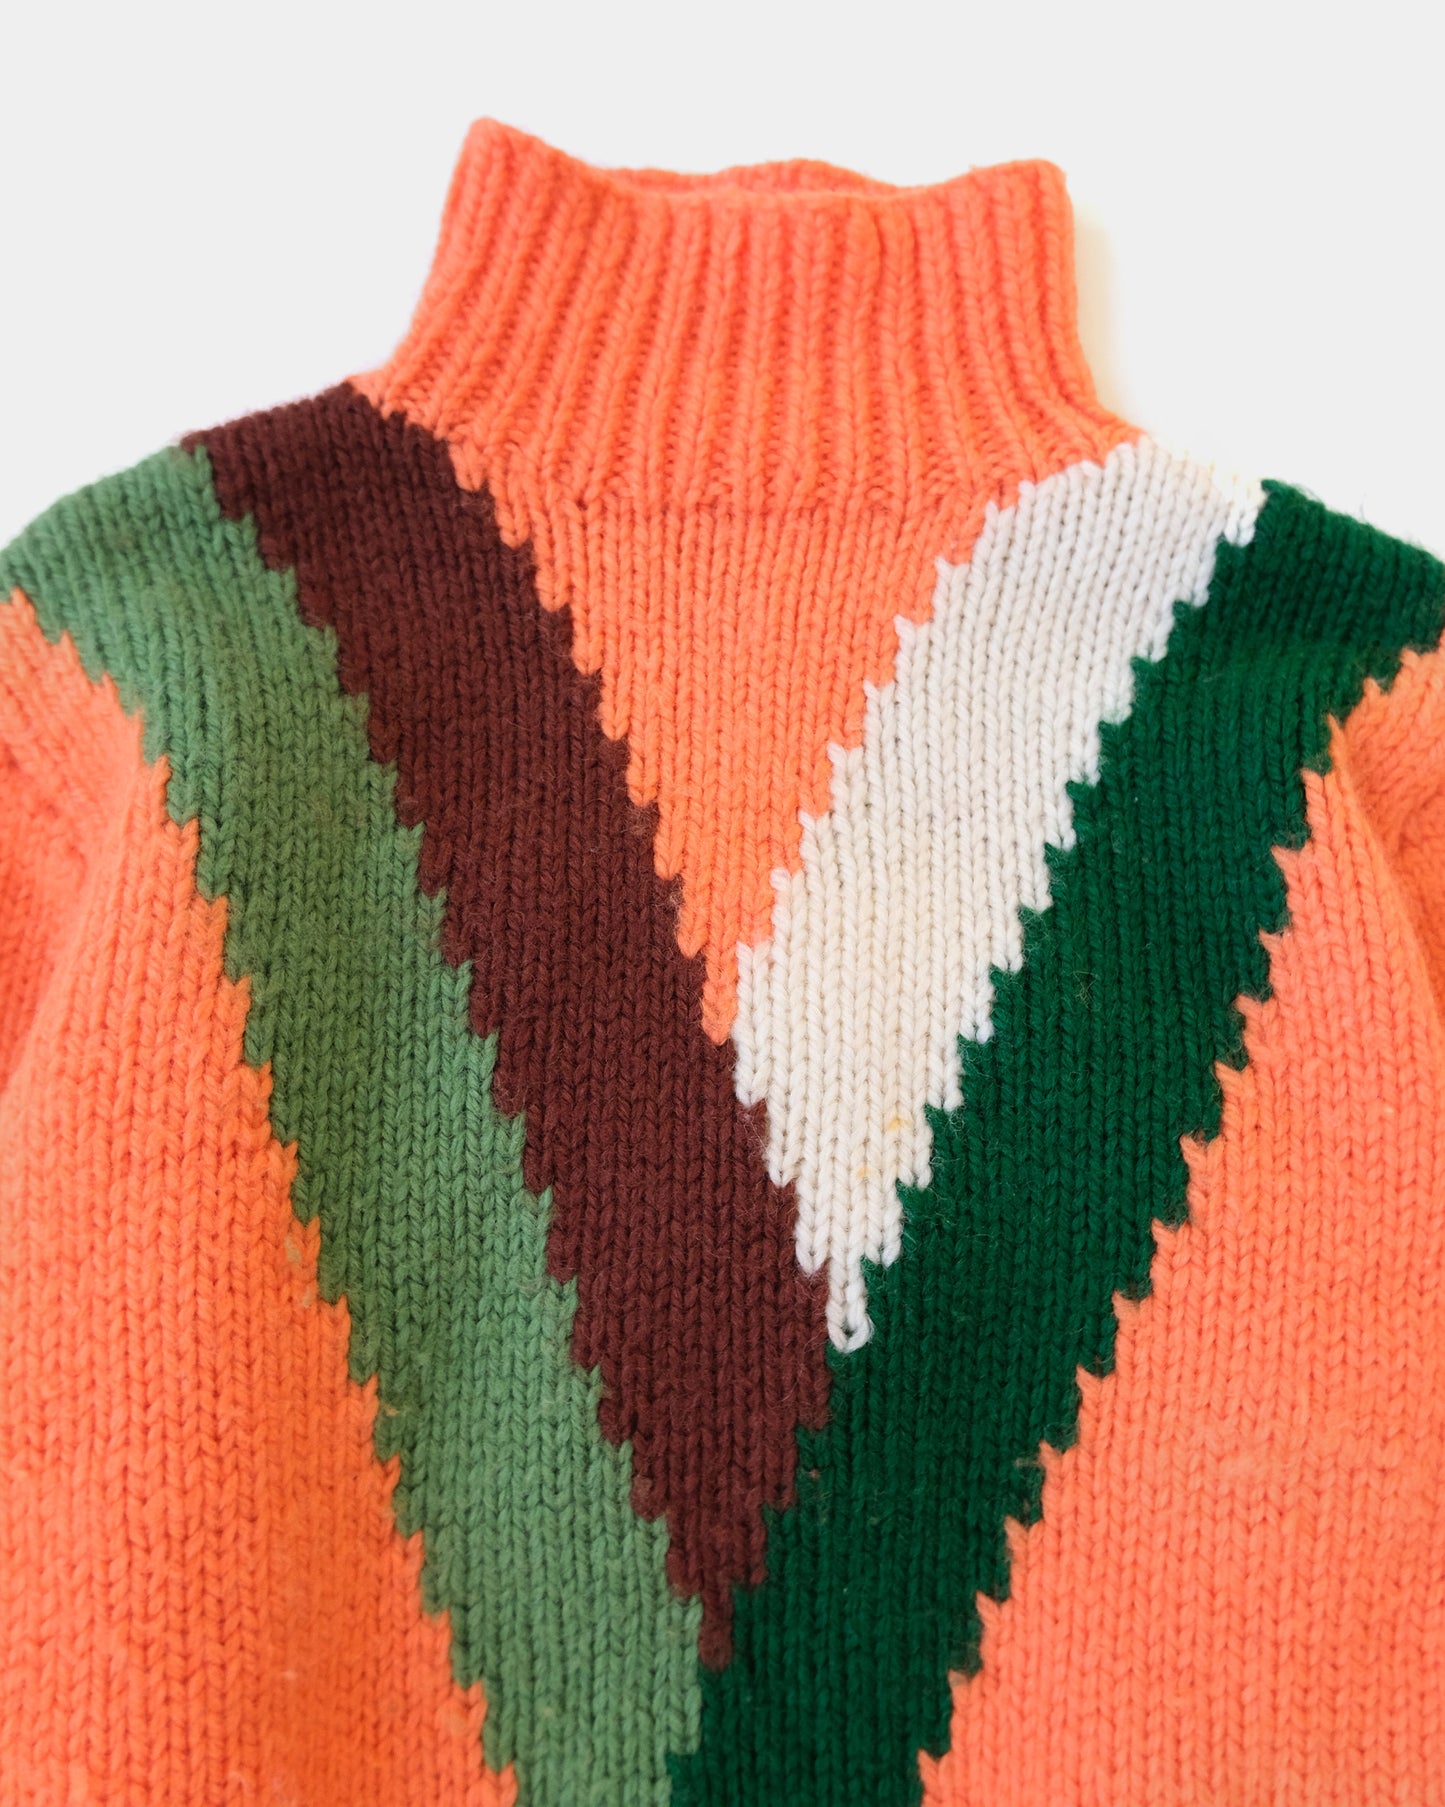 80s Wool Patterned Sweater